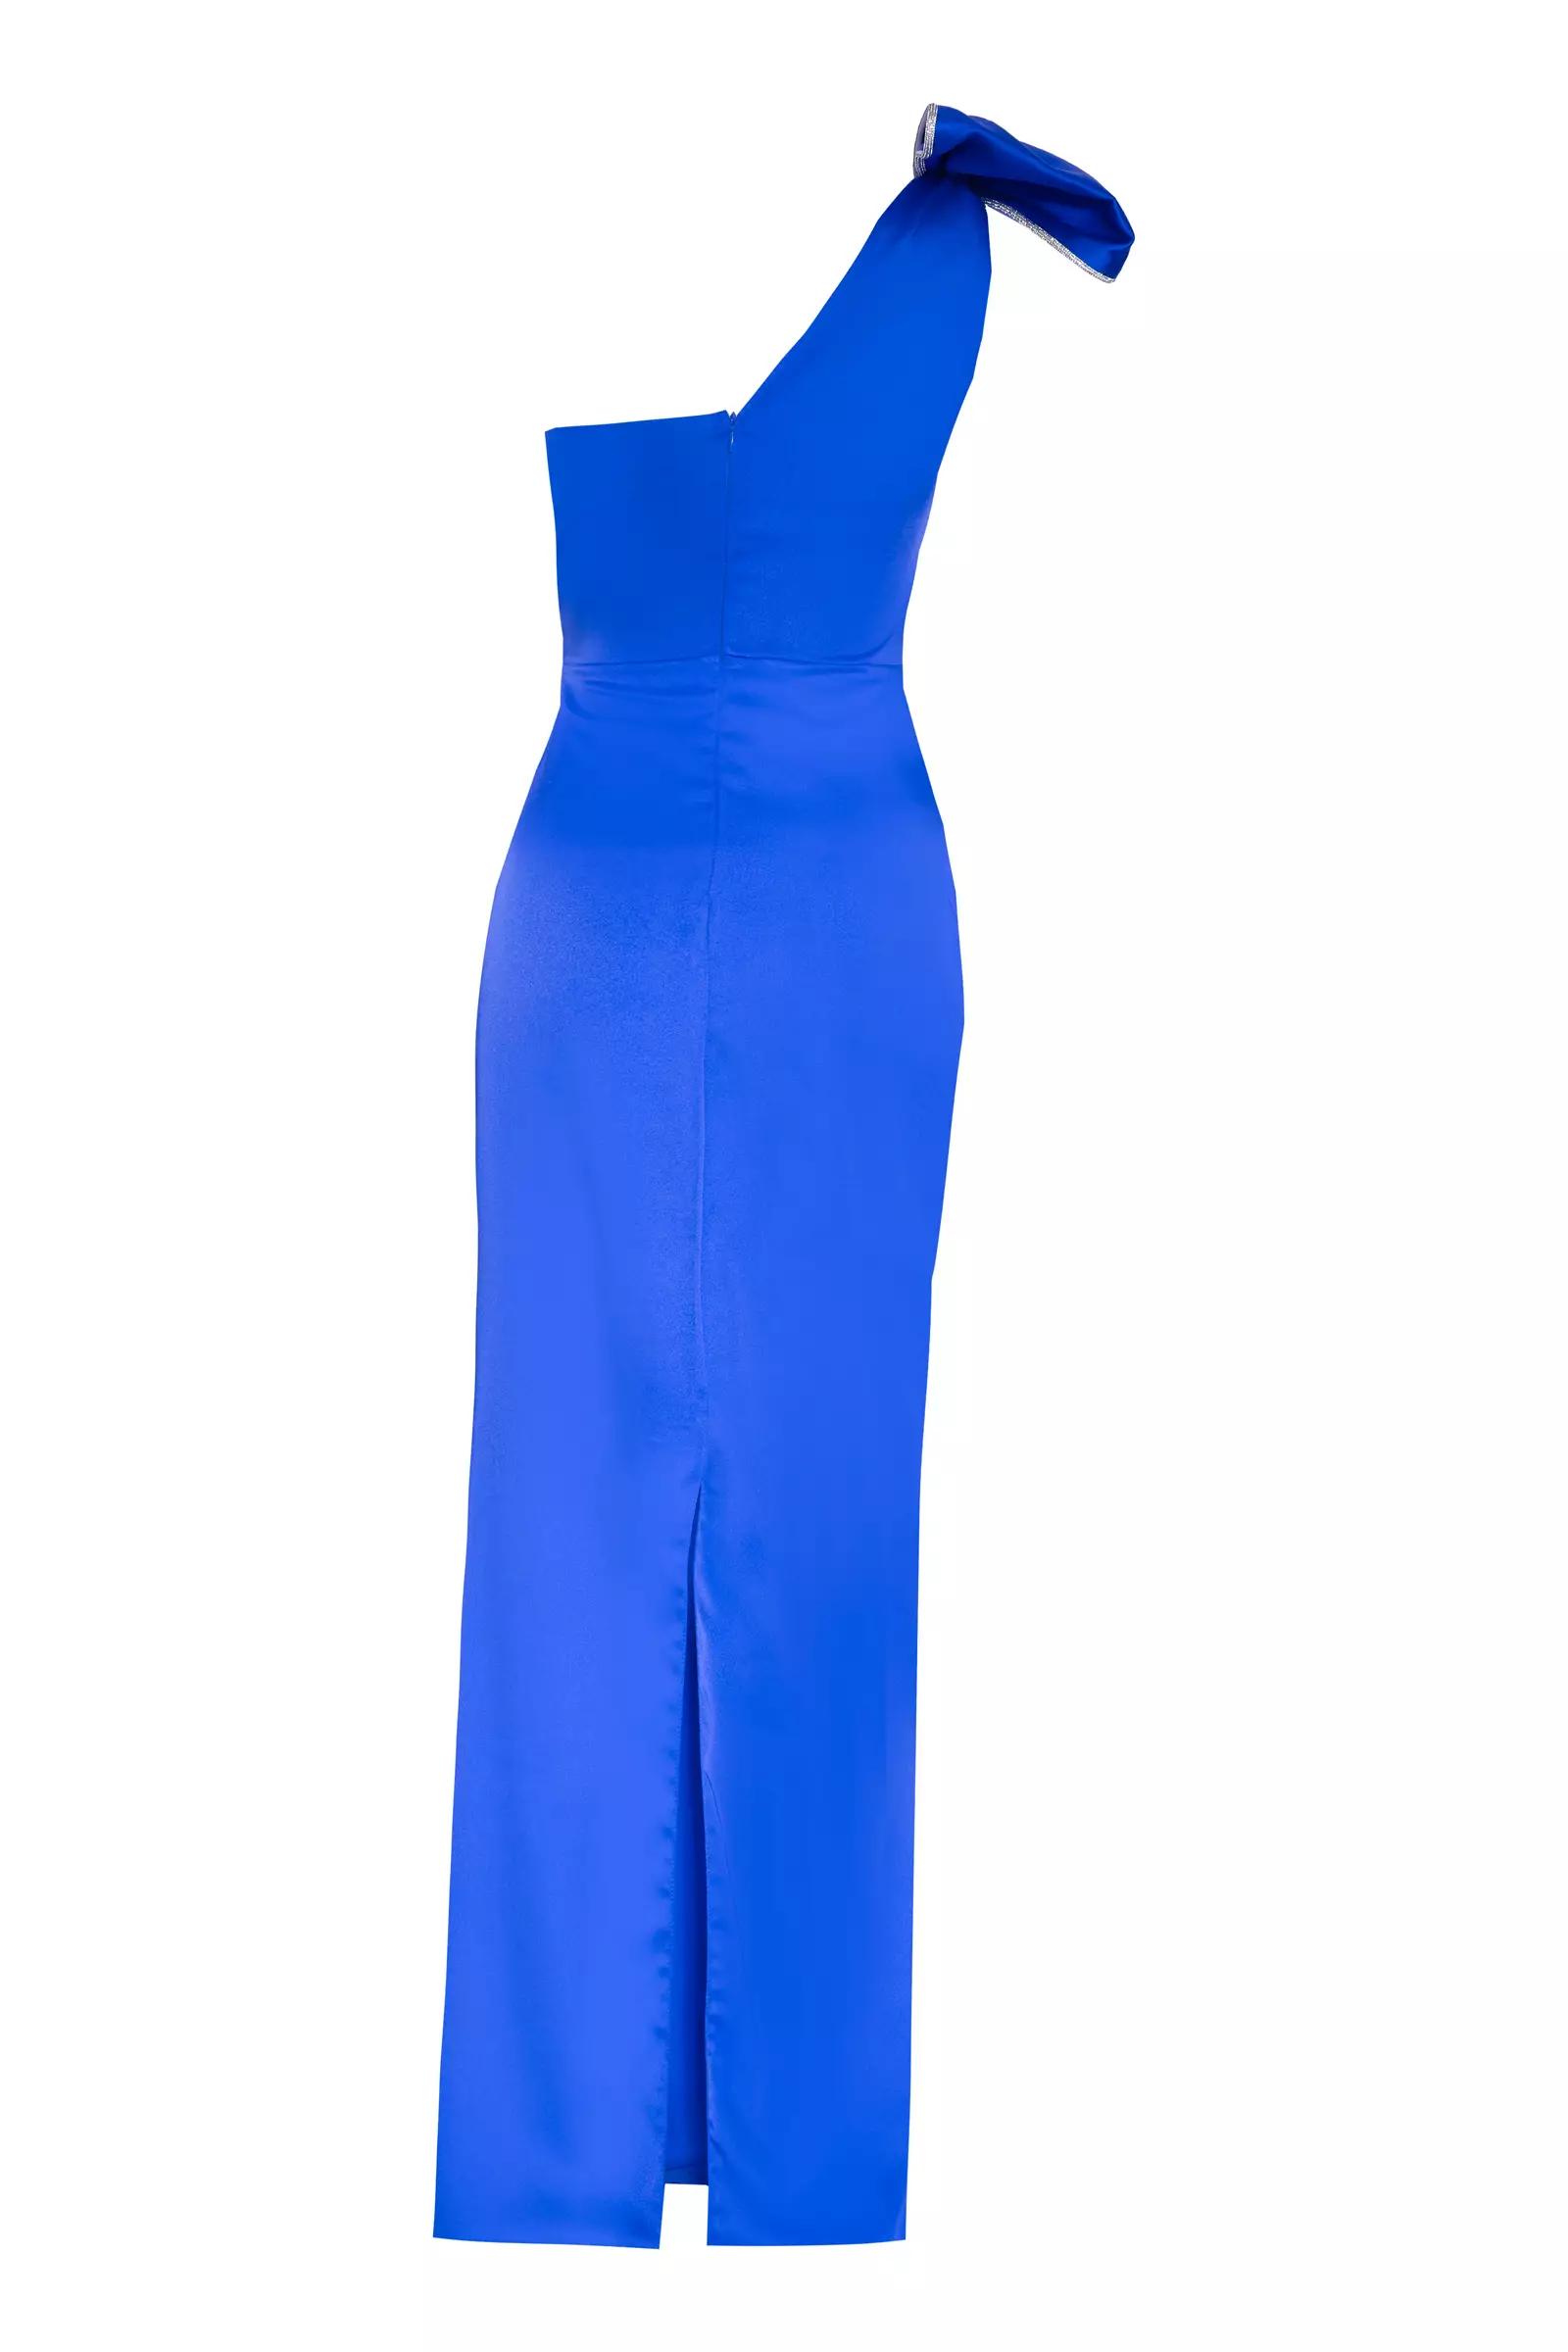 Blue satin one arm maxi dress